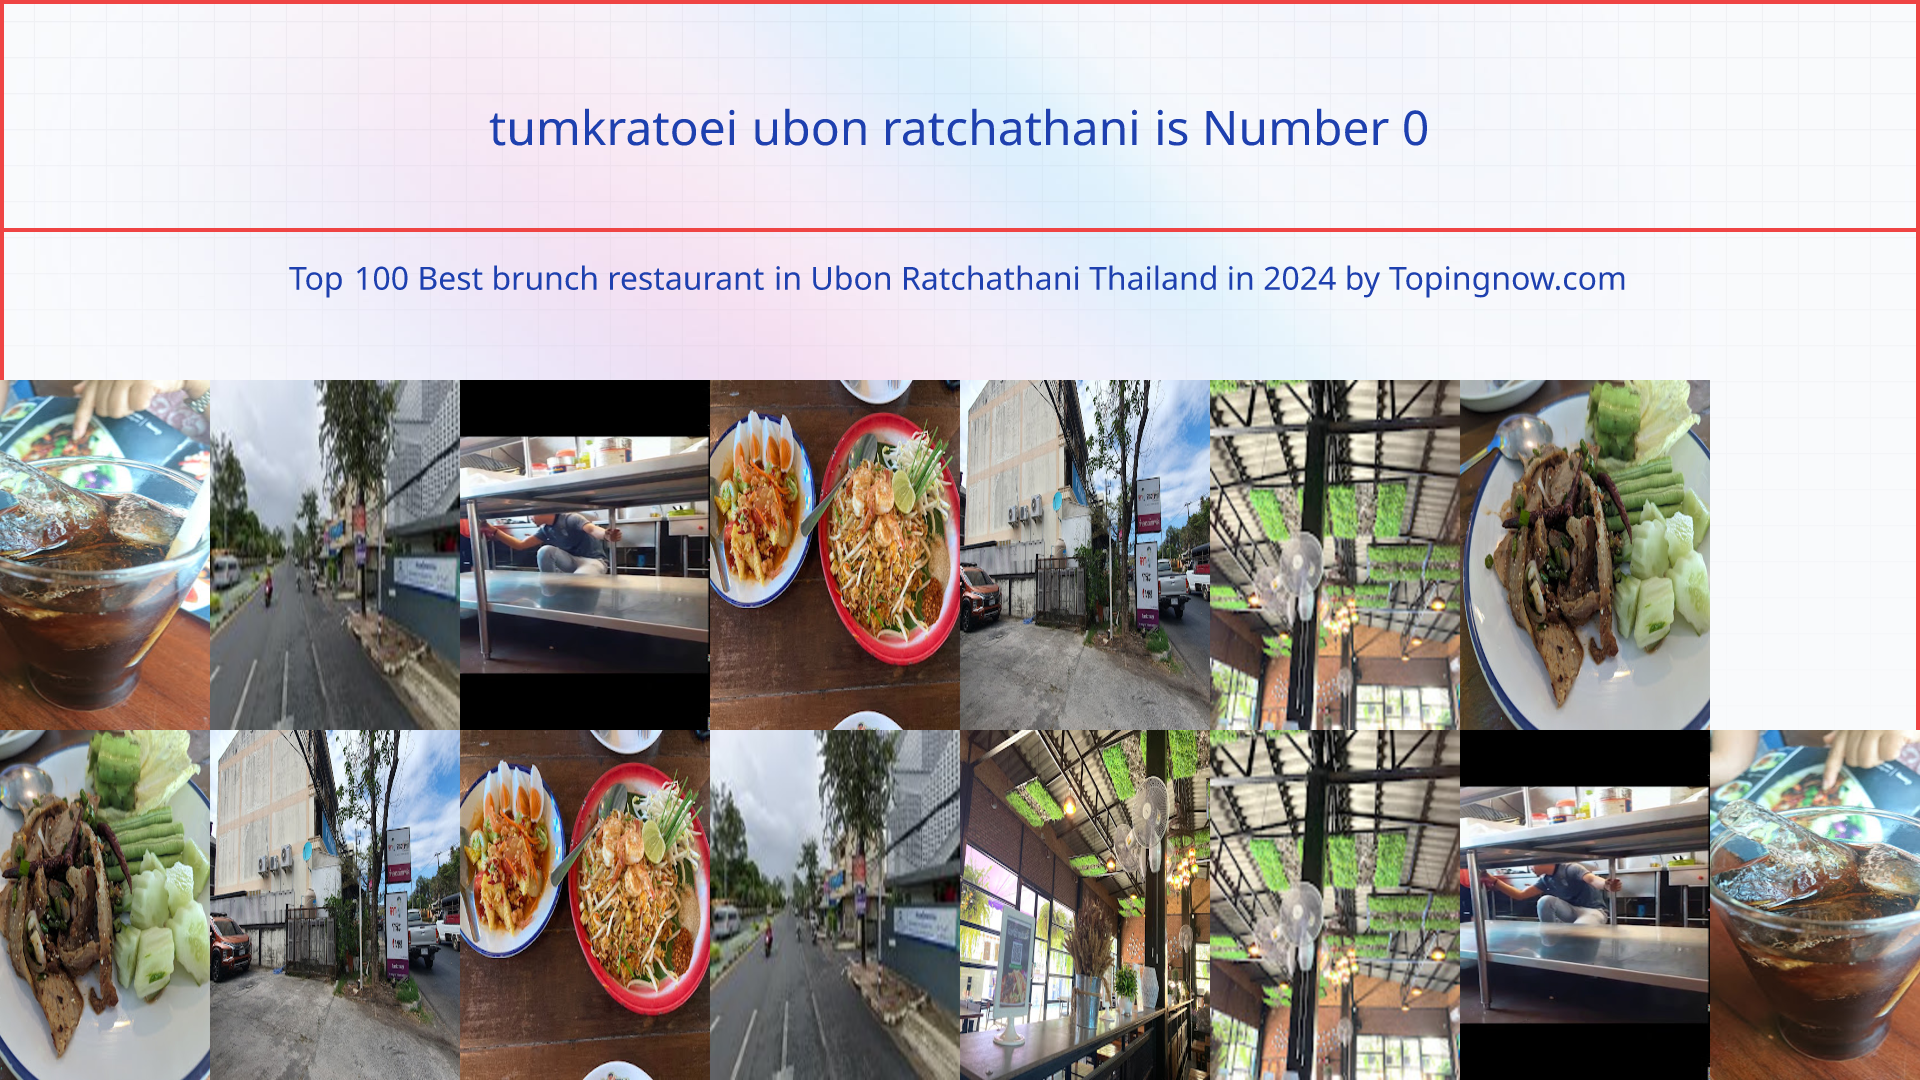 tumkratoei ubon ratchathani: Top 100 Best brunch restaurant in Ubon Ratchathani Thailand in 2024